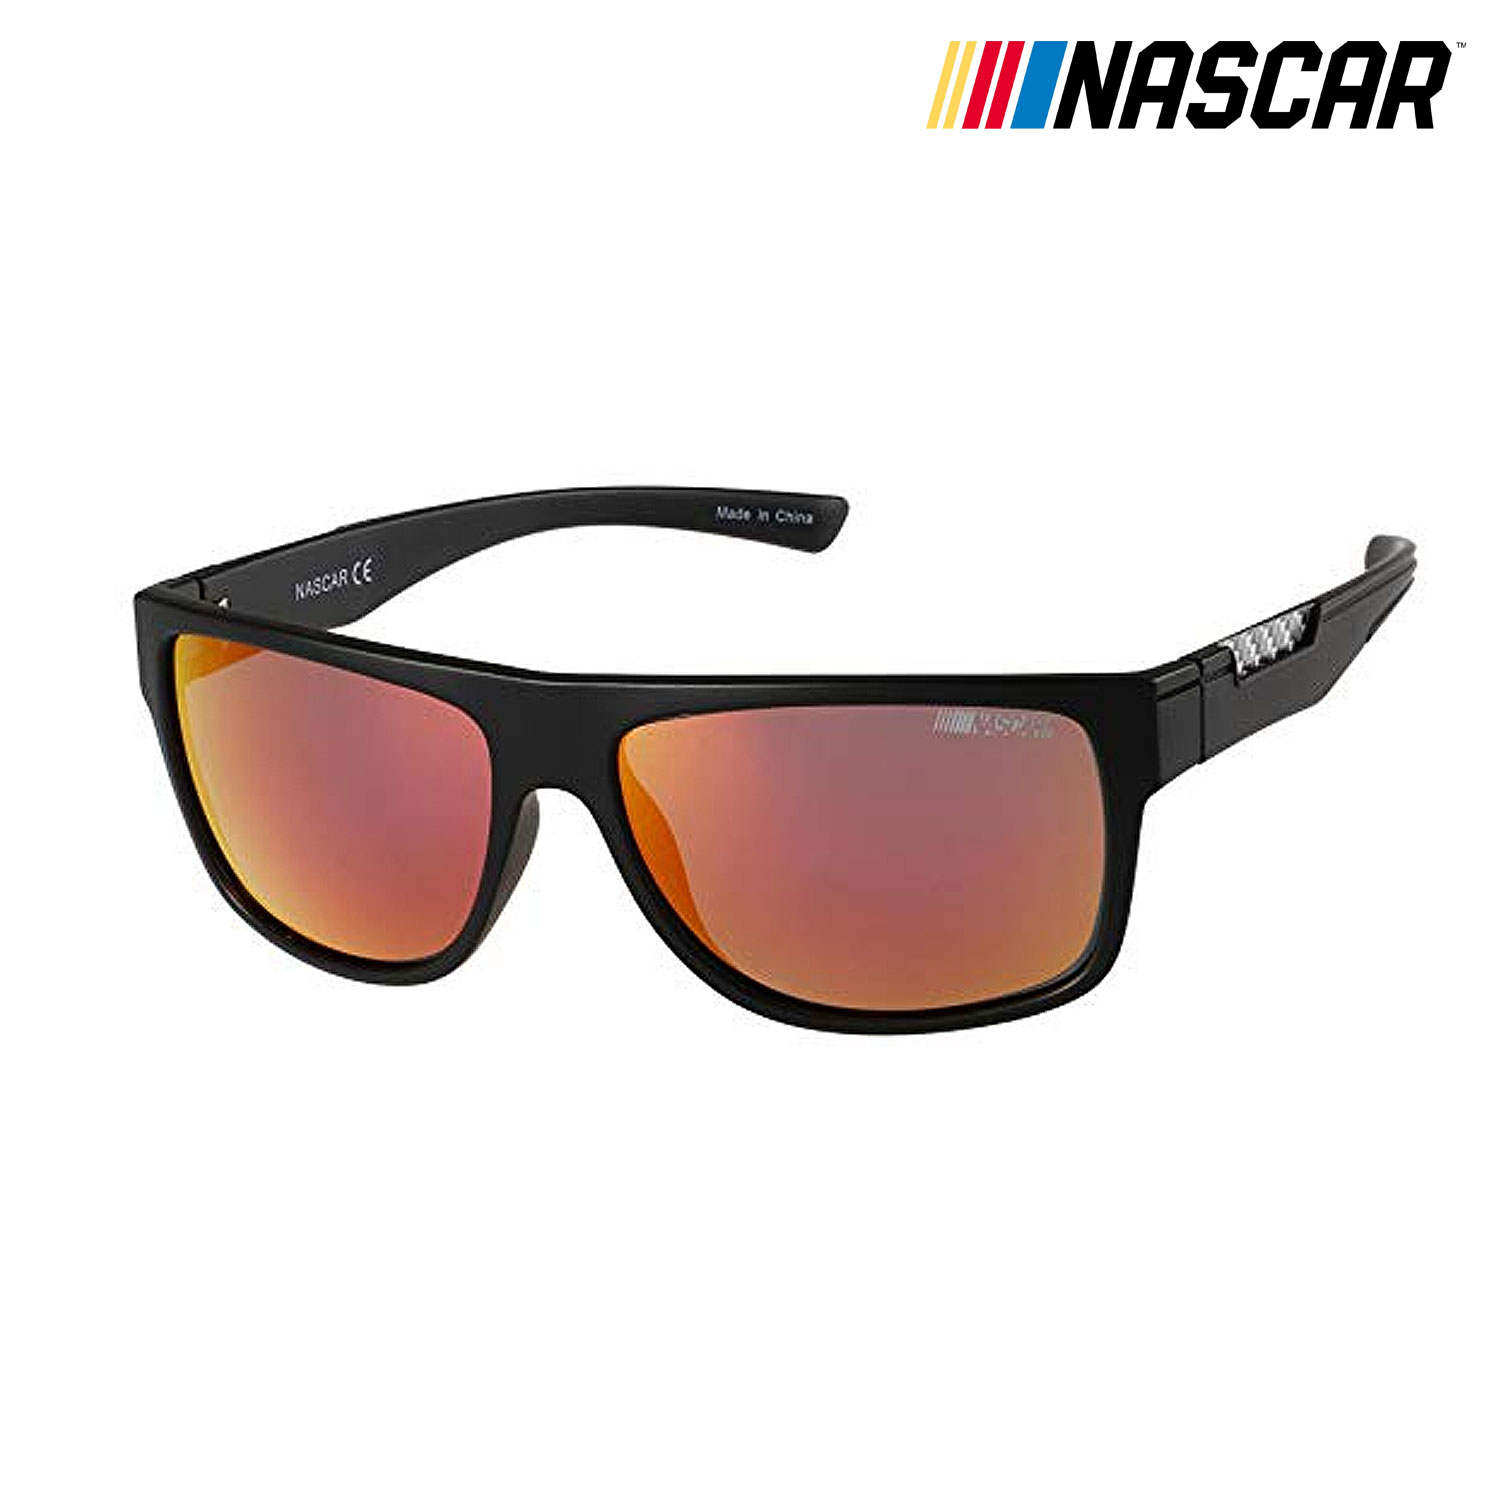 NASCAR Sunglasses Overdrive Polarized